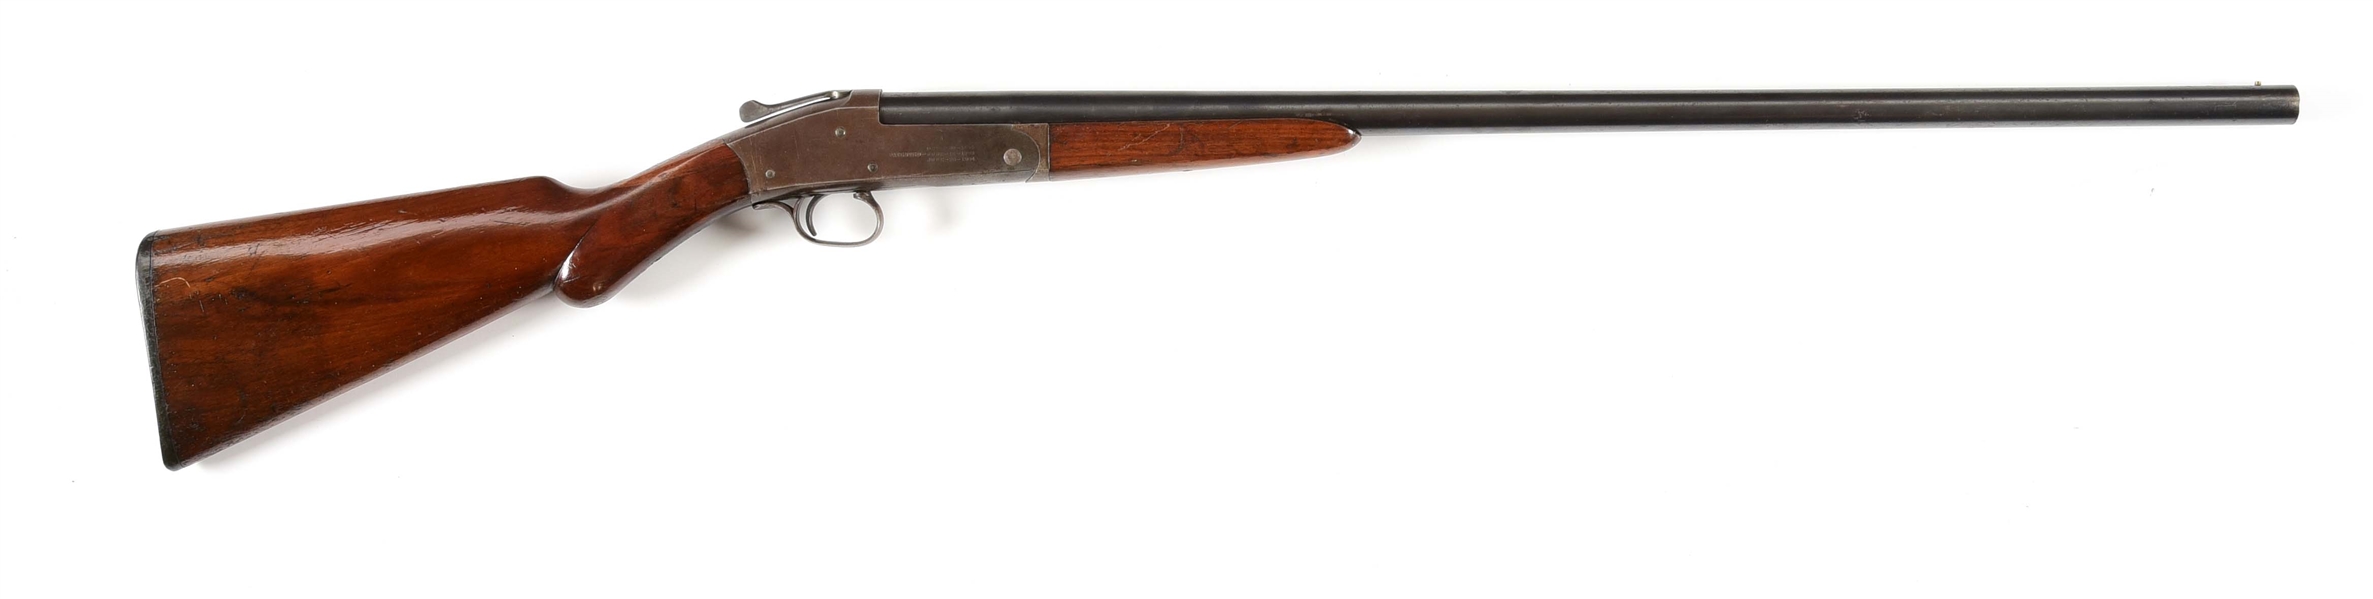 (C) REMINGTON MODEL 1902 NO. 9 SINGLE SHOT SHOTGUN.